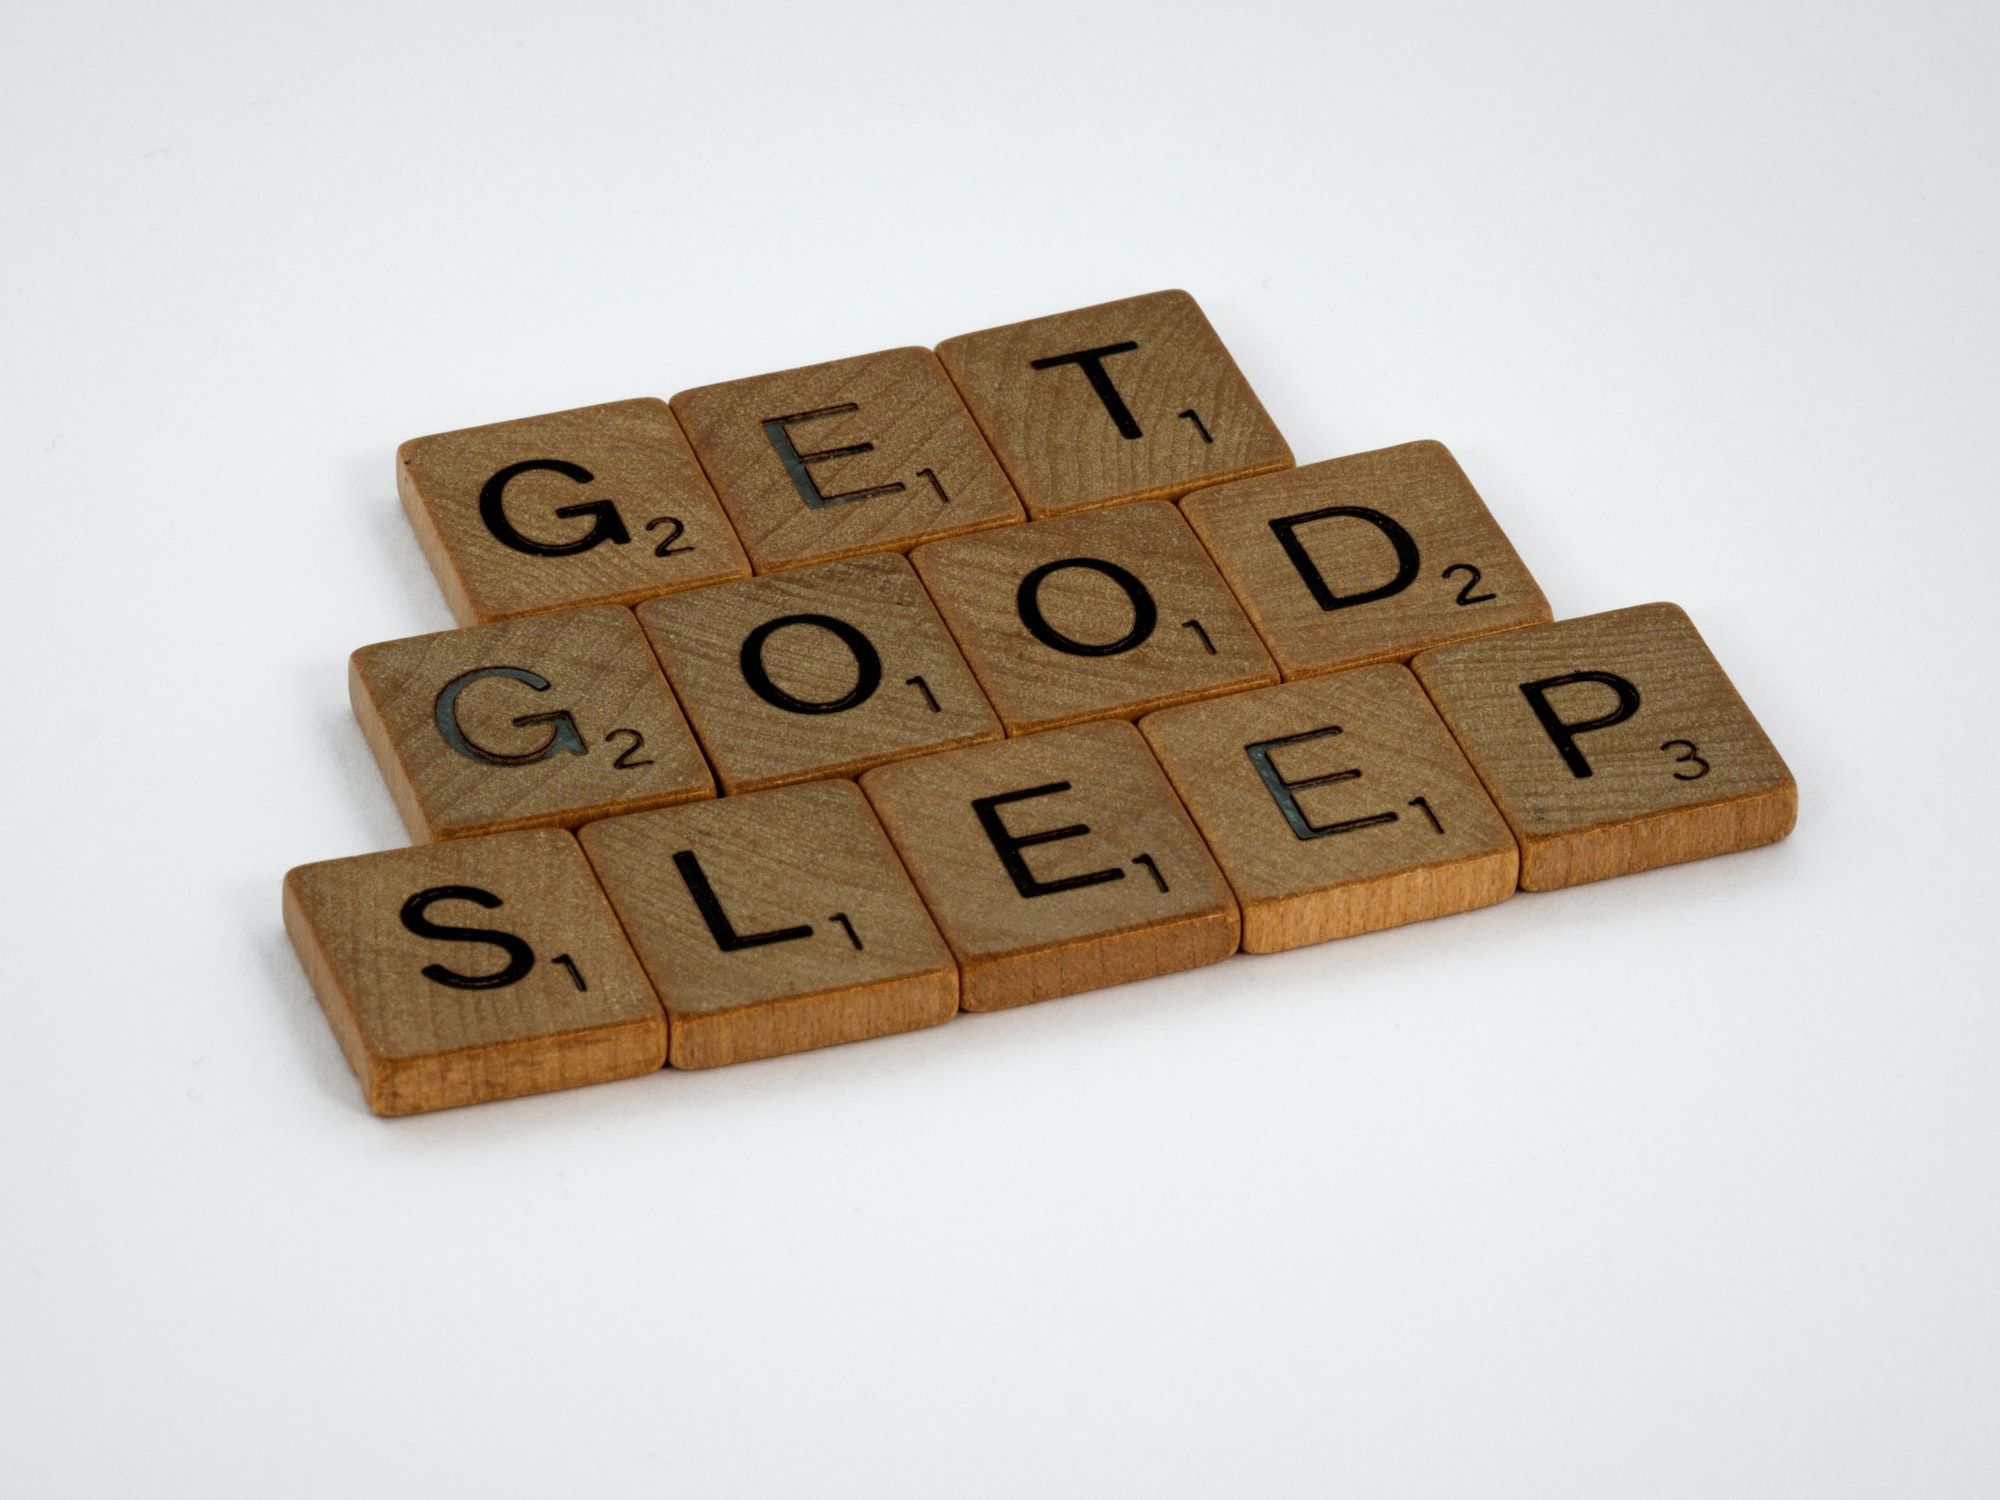 How to get a good nights sleep